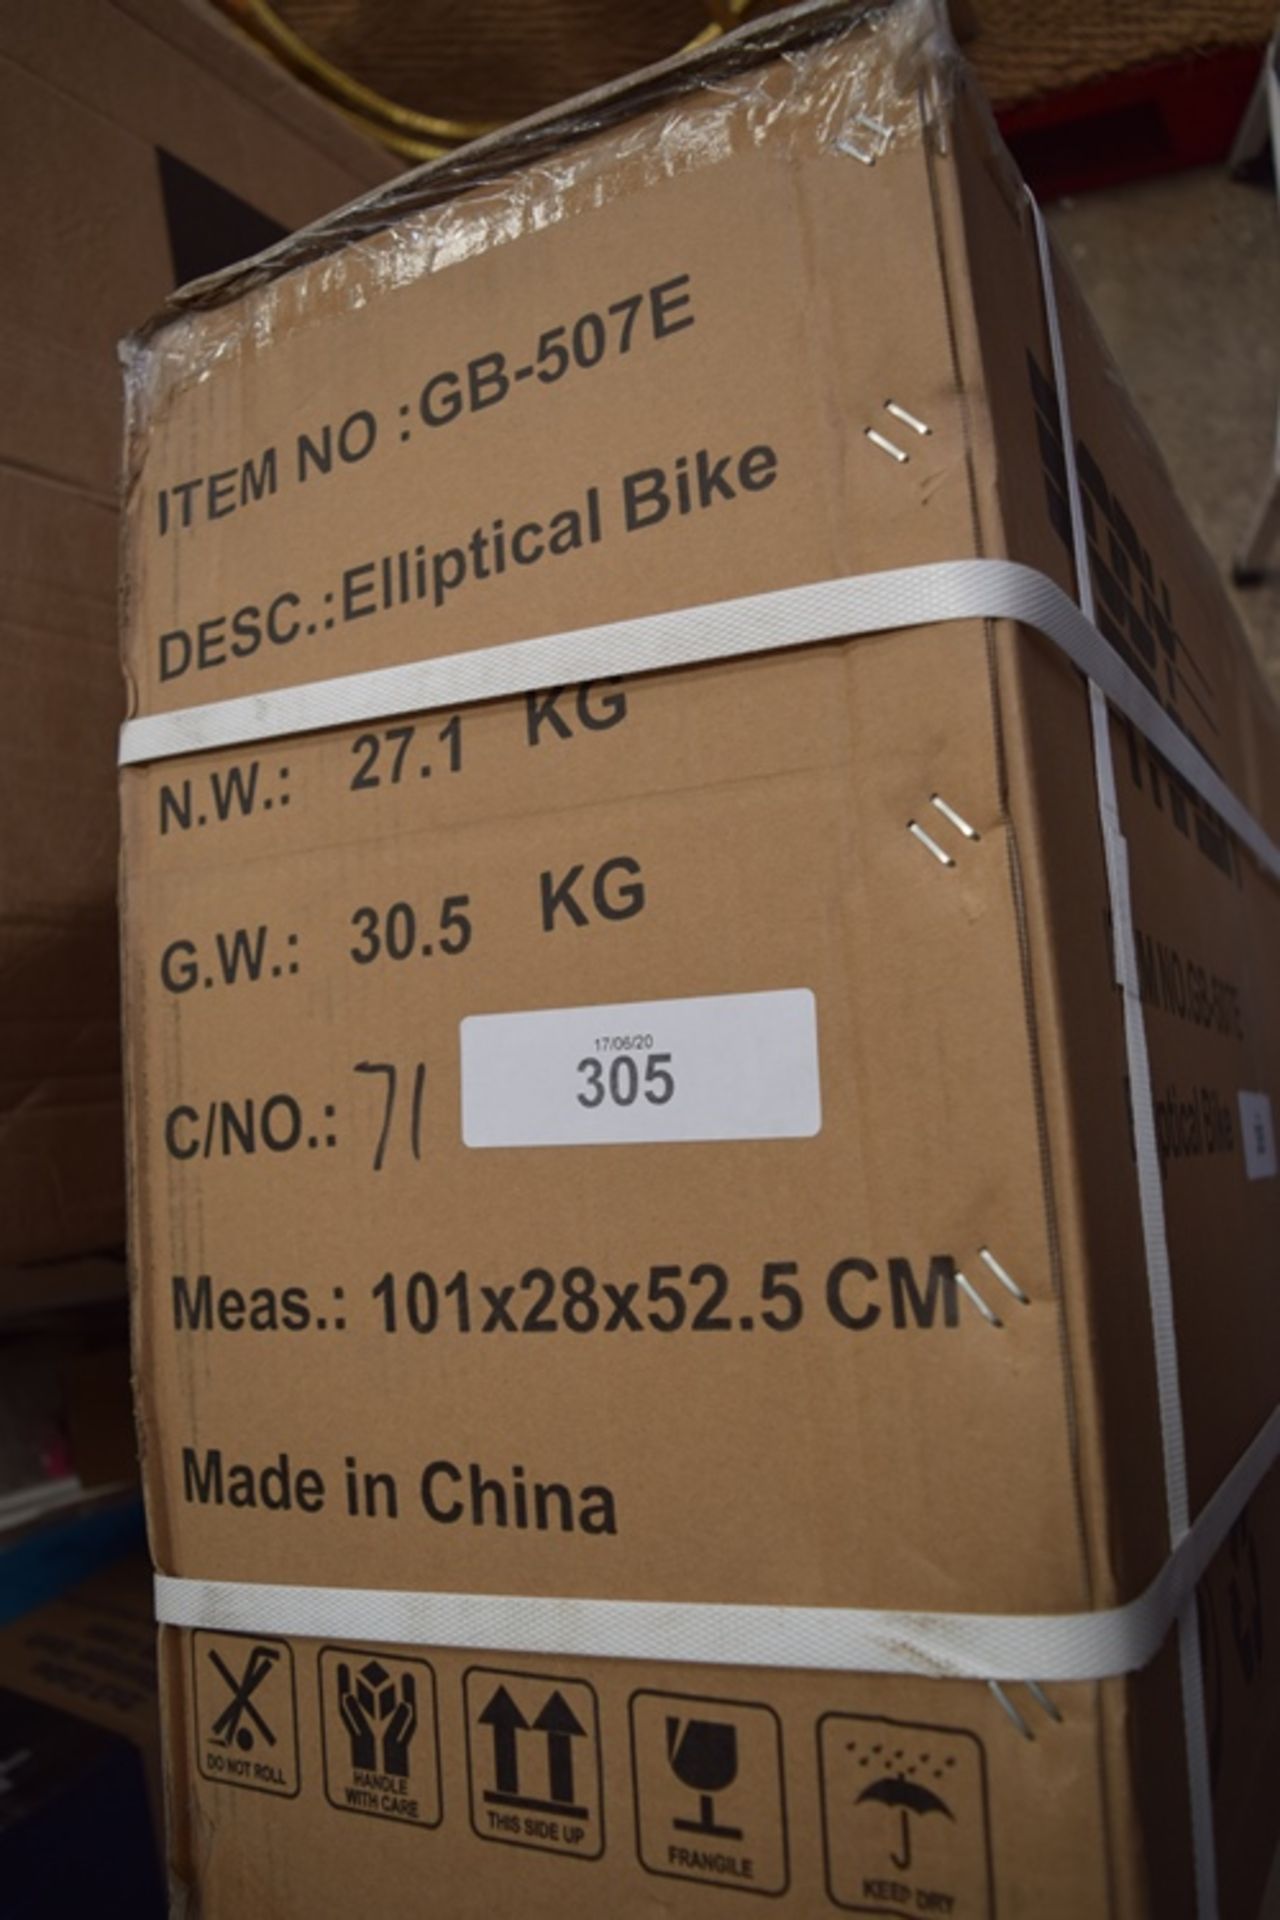 1 x Body Train Elliptical bike, model GB-507E - Sealed new in box (GS27) - Image 2 of 2